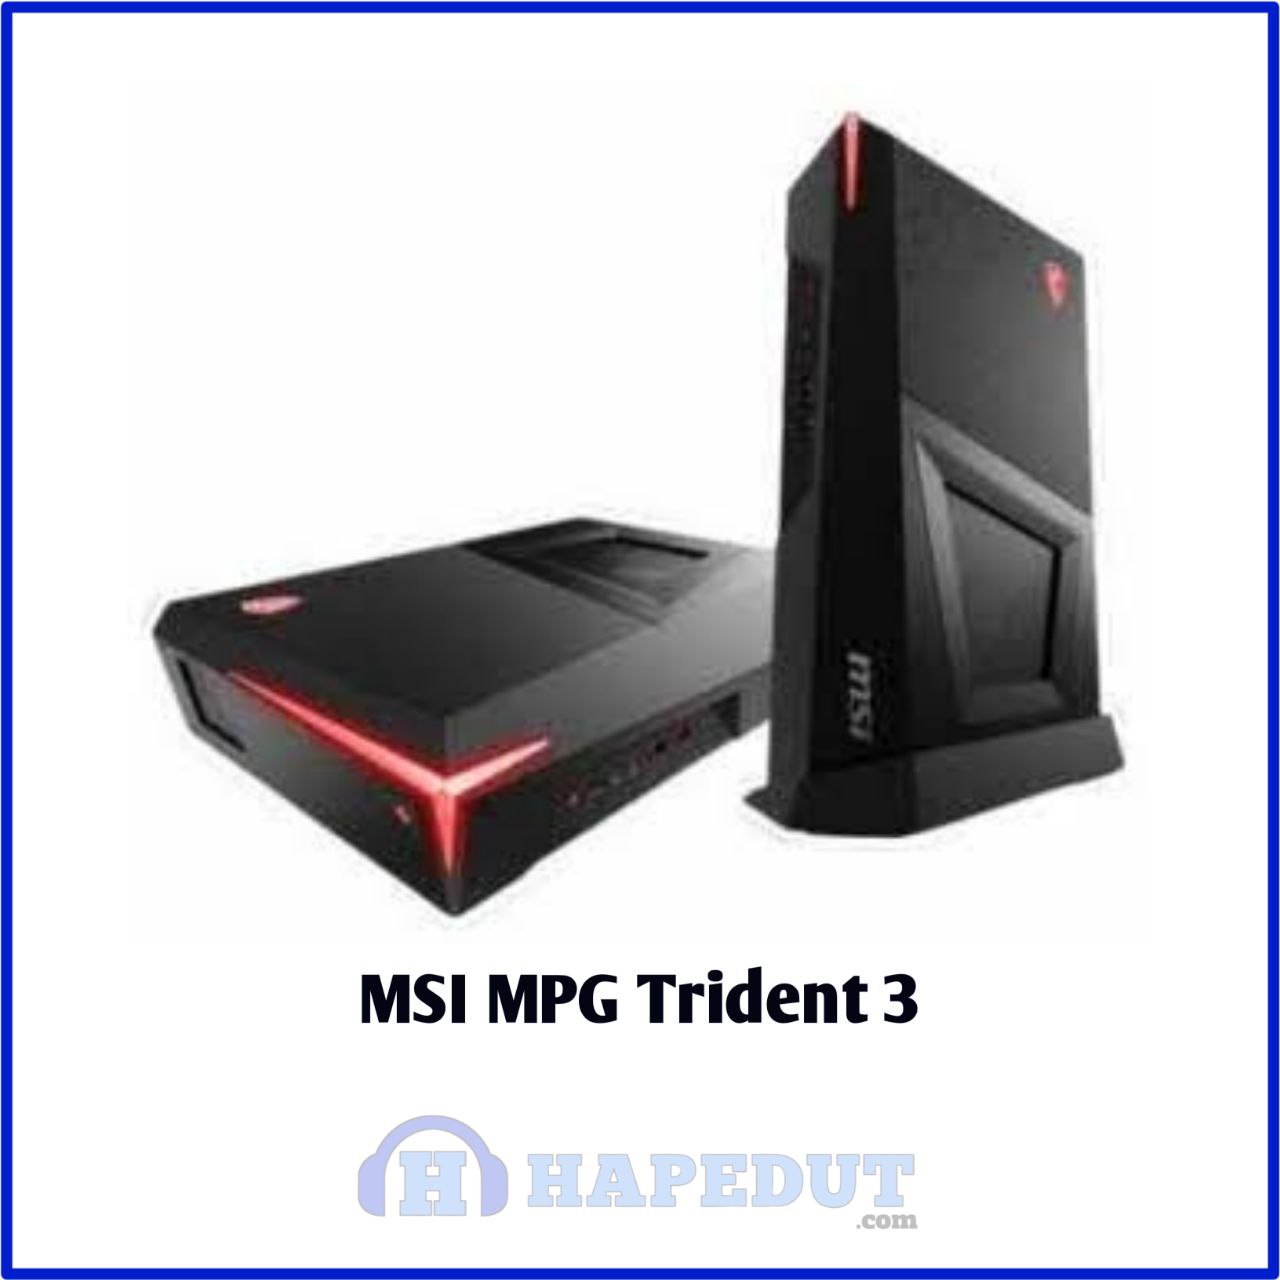 MSI MPG Trident 3 : Hapedut